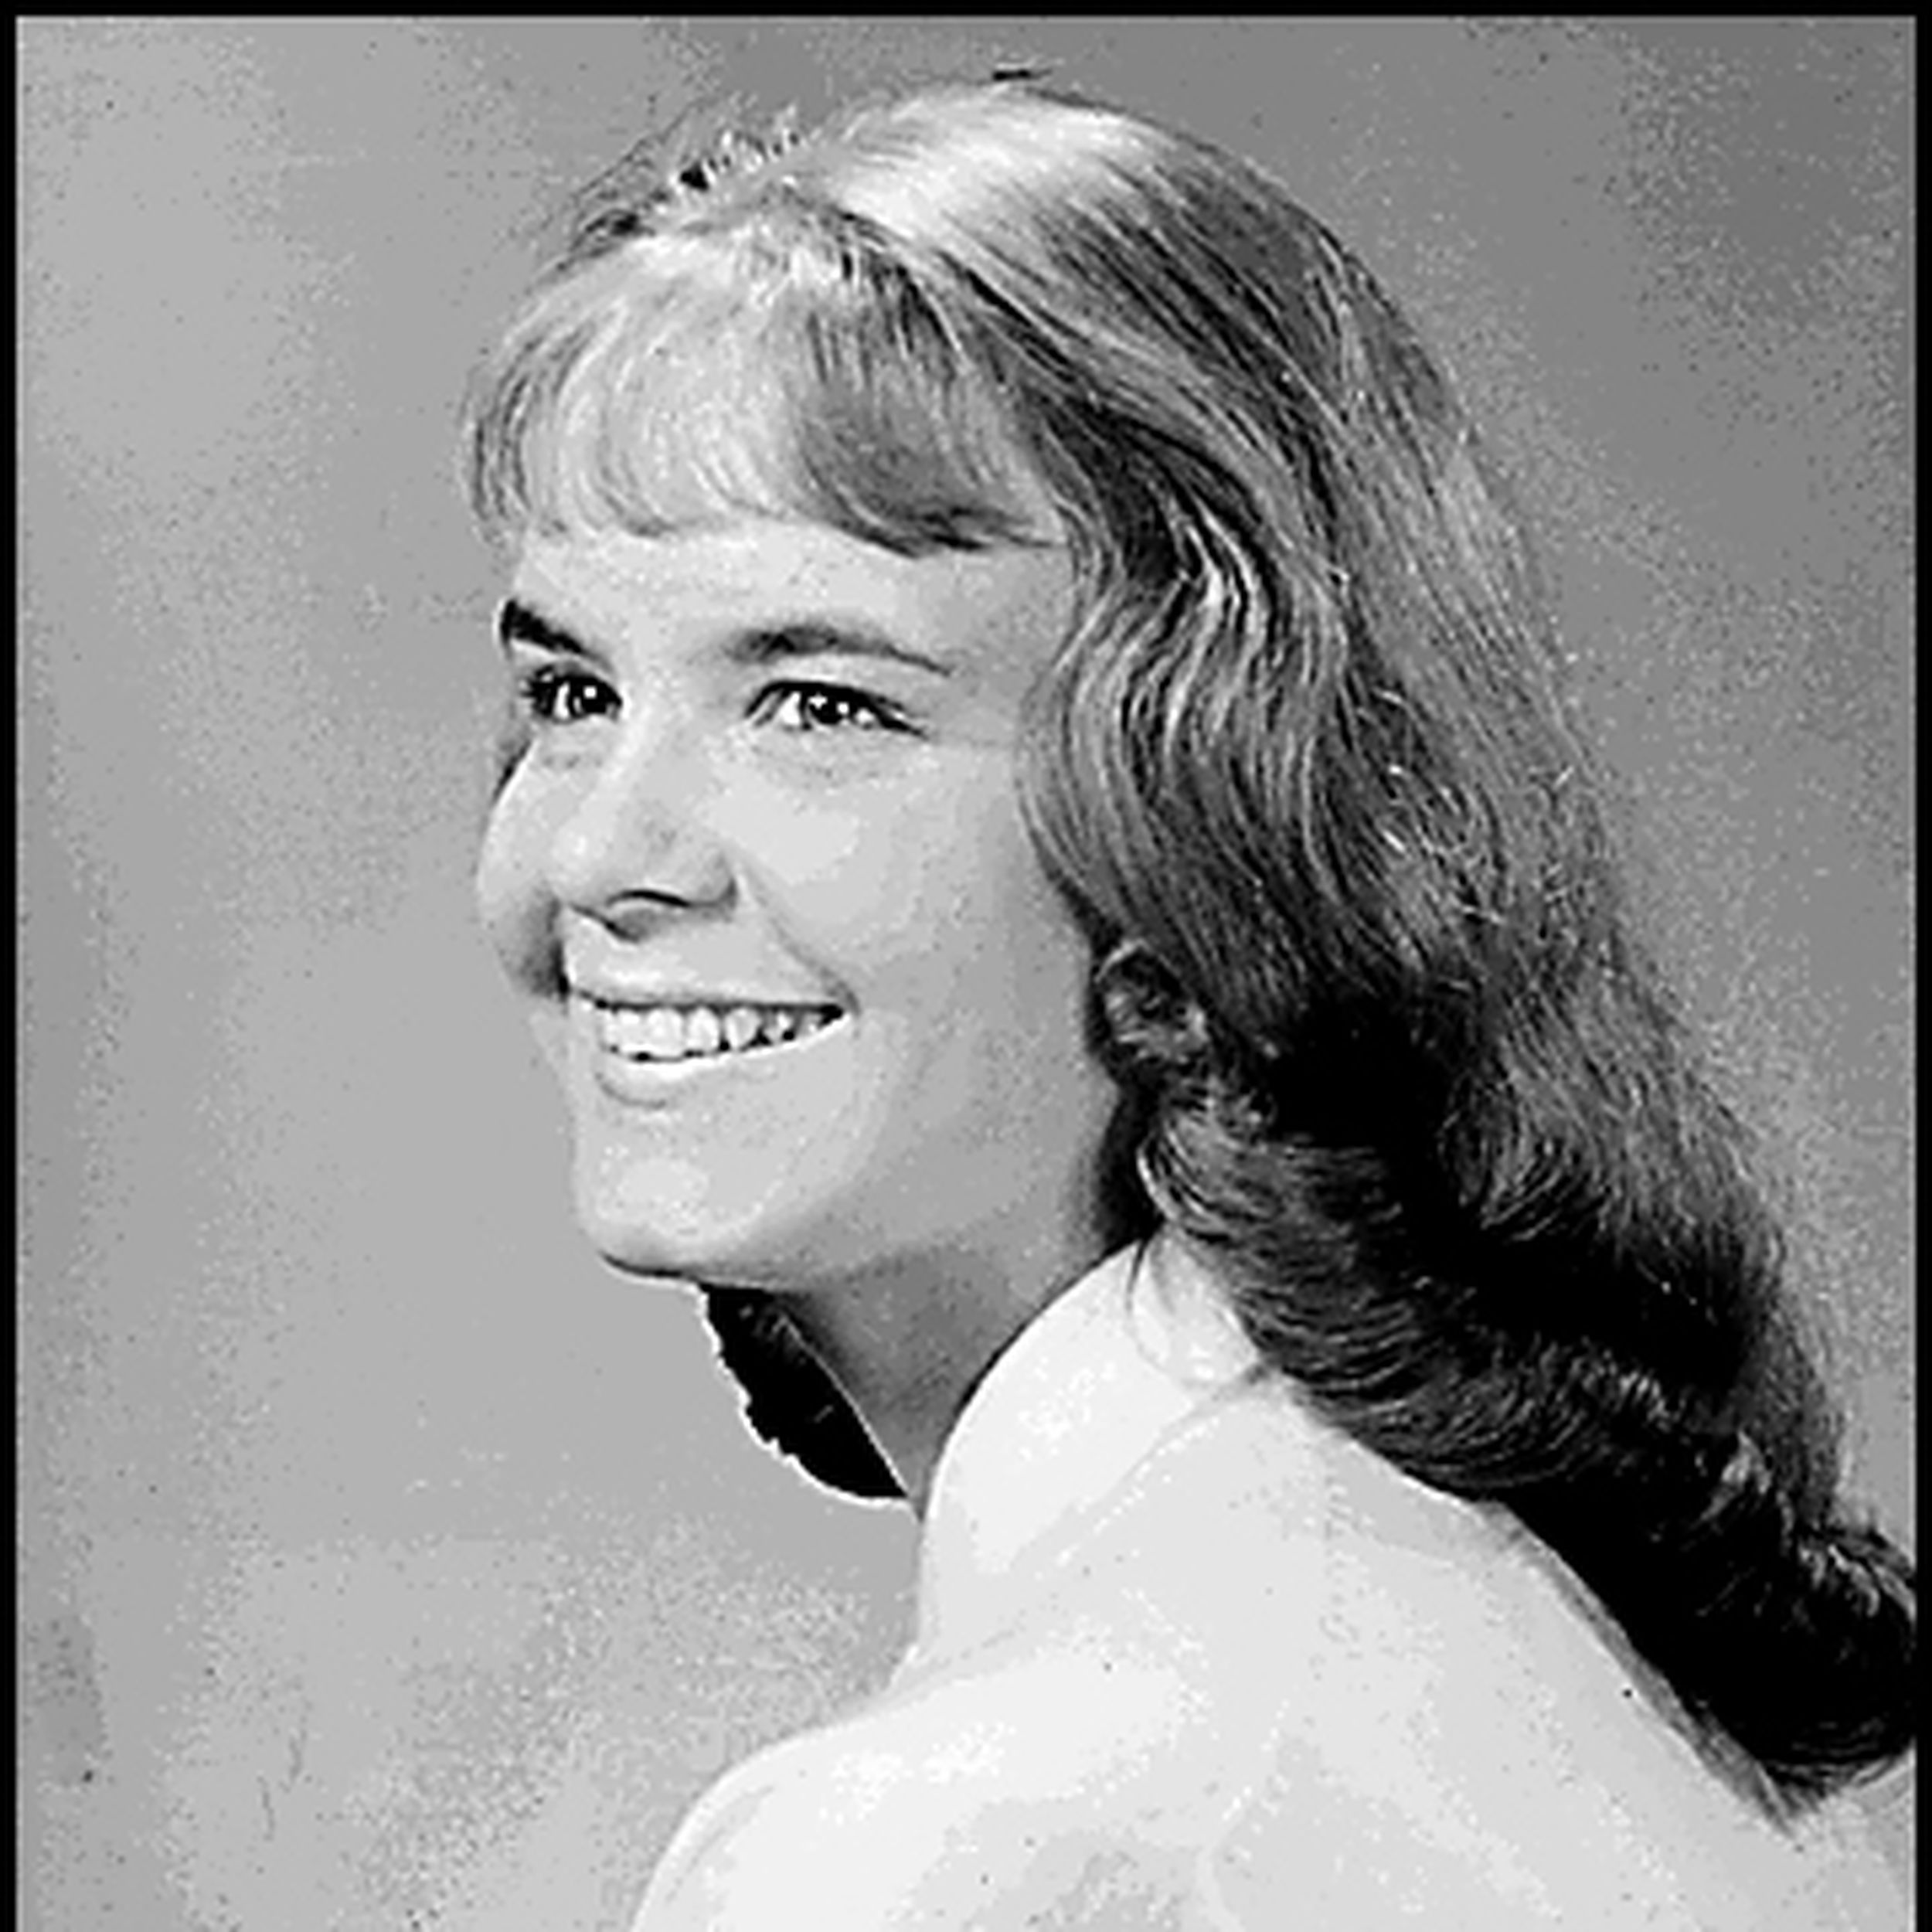 Obituary: Lemon, Dorothy M.